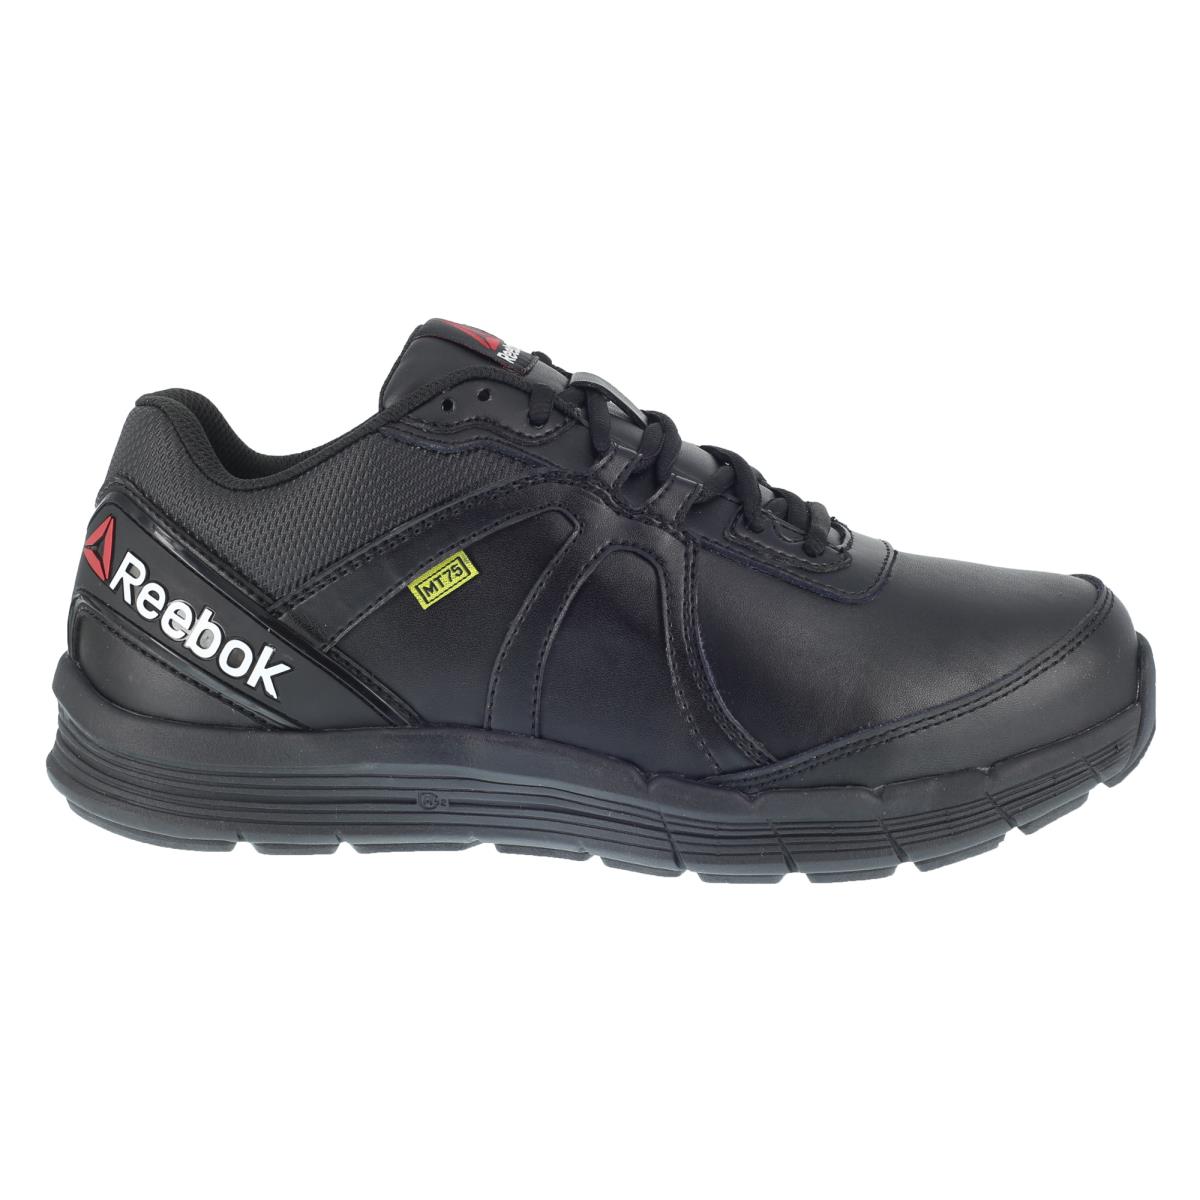 Reebok Mens Black Leather Work Shoes Metguard ST SR Oxford M